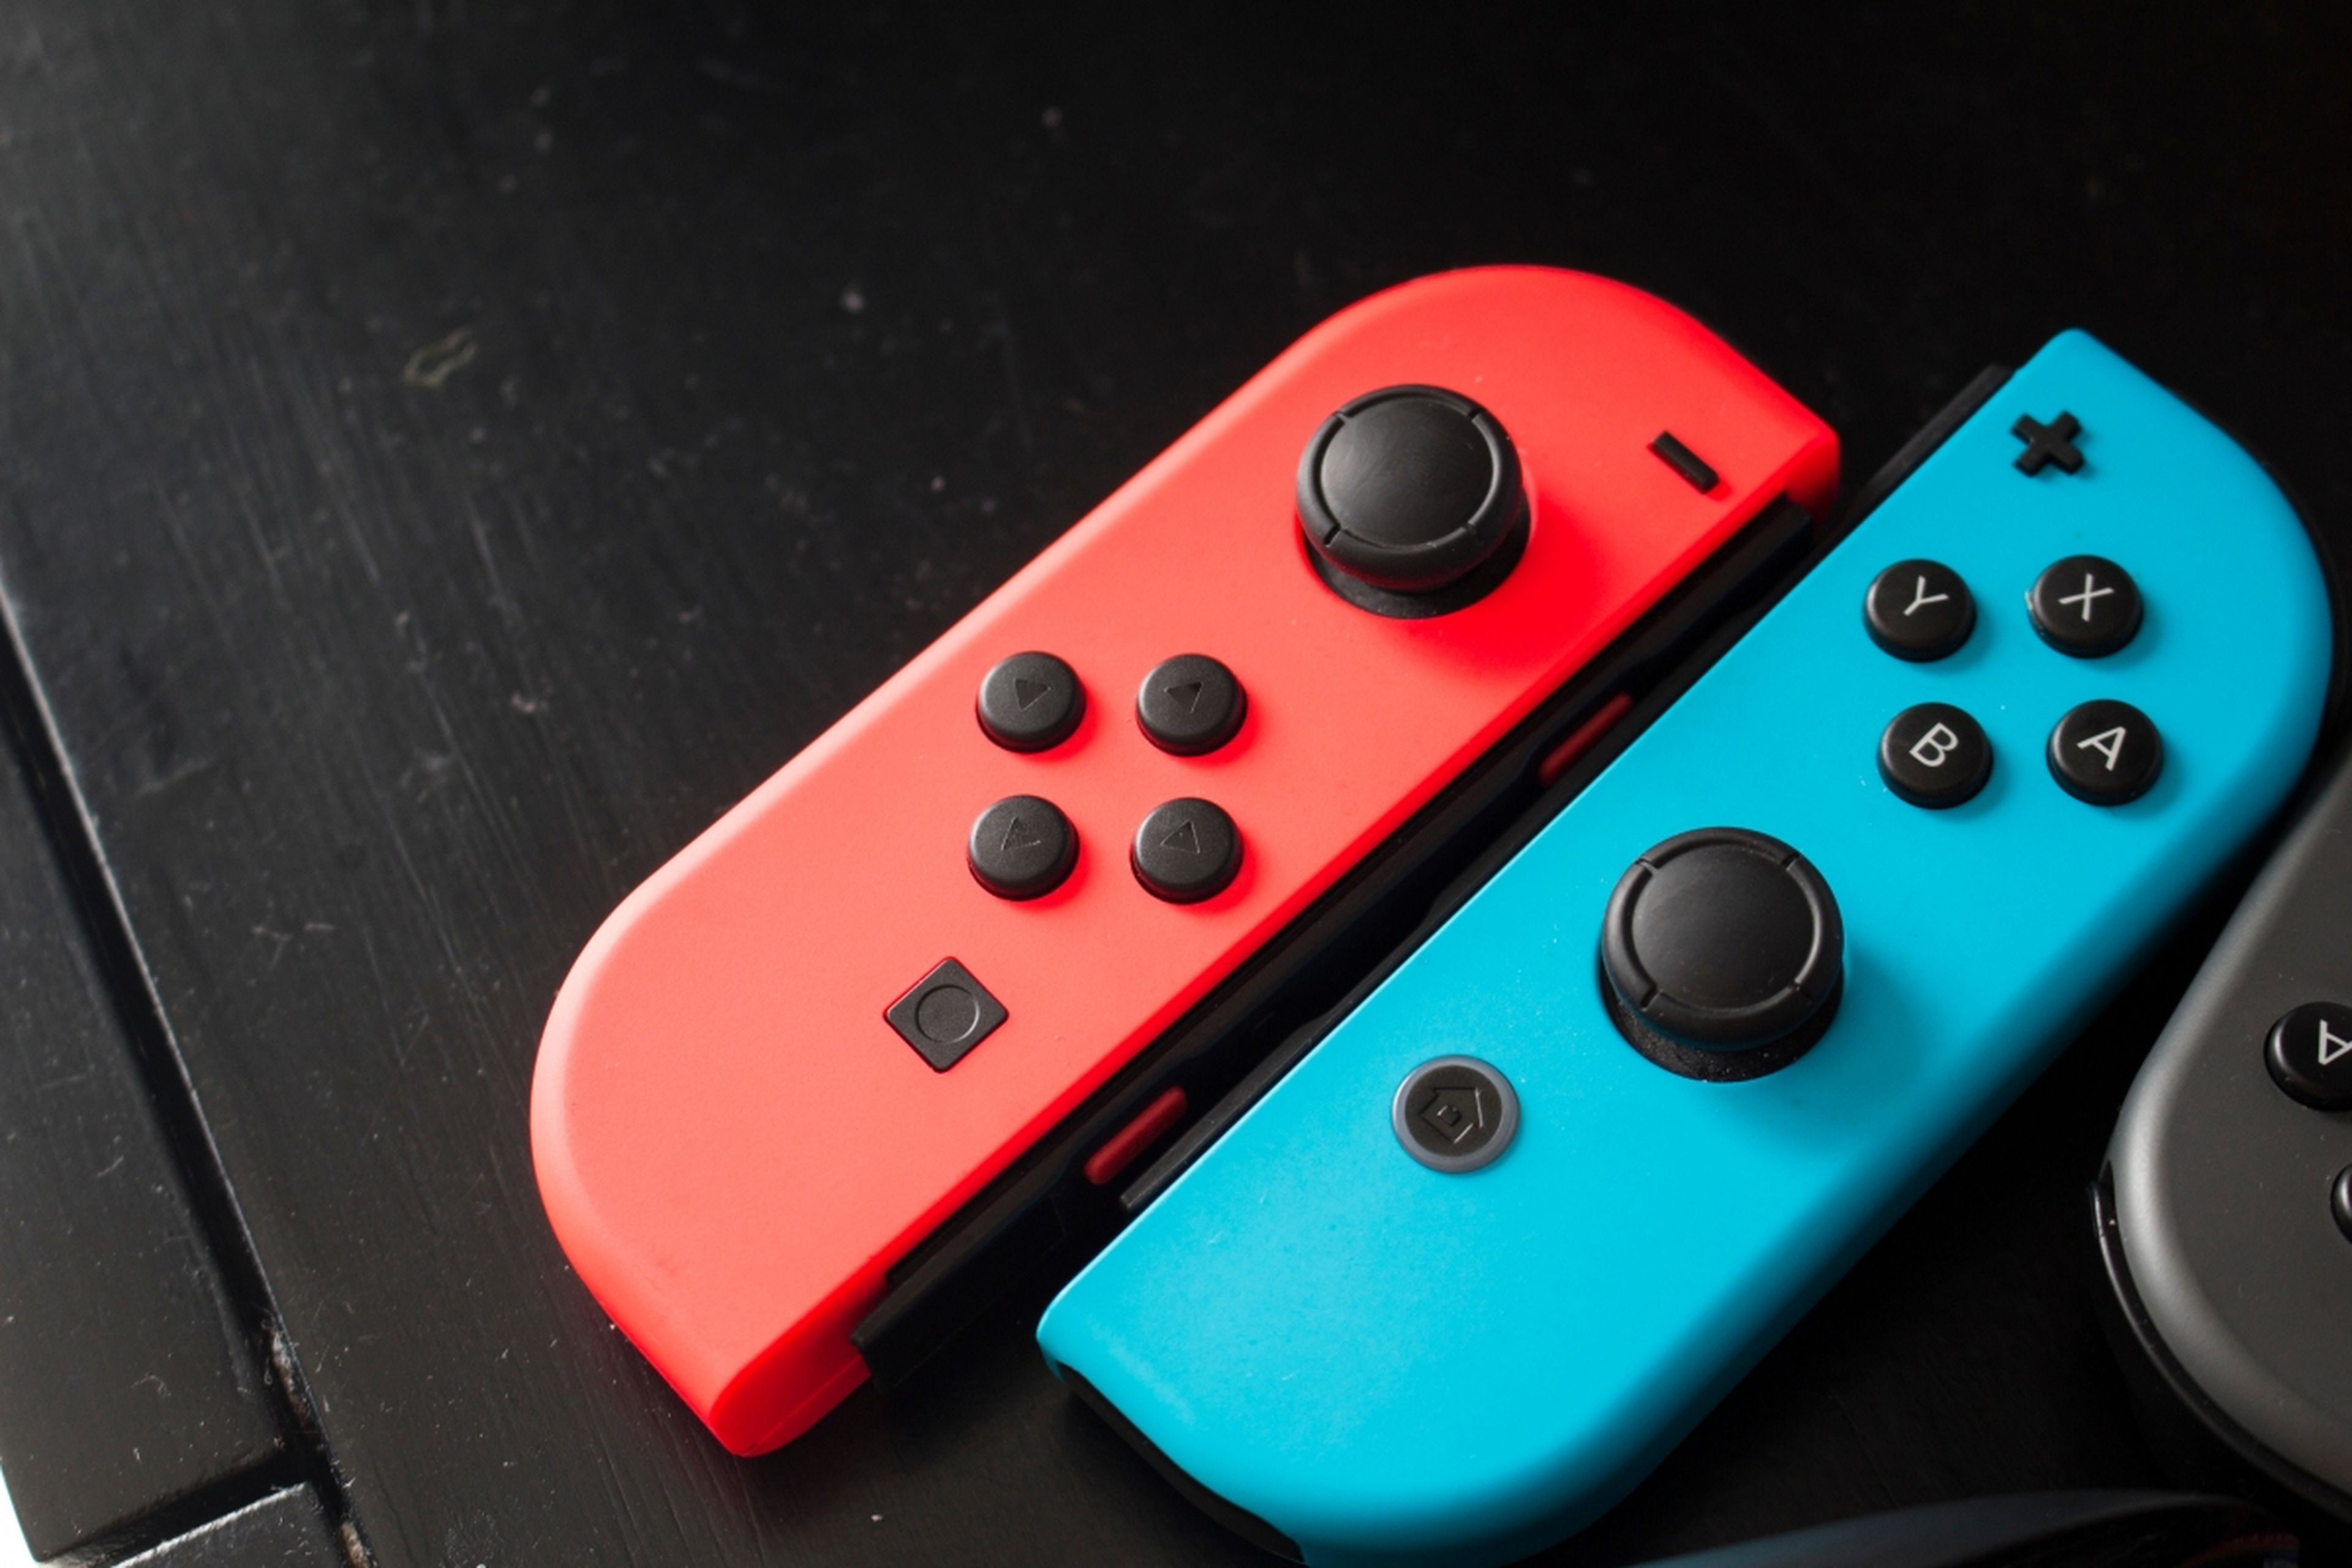 Joy-Con Nintendo Switch